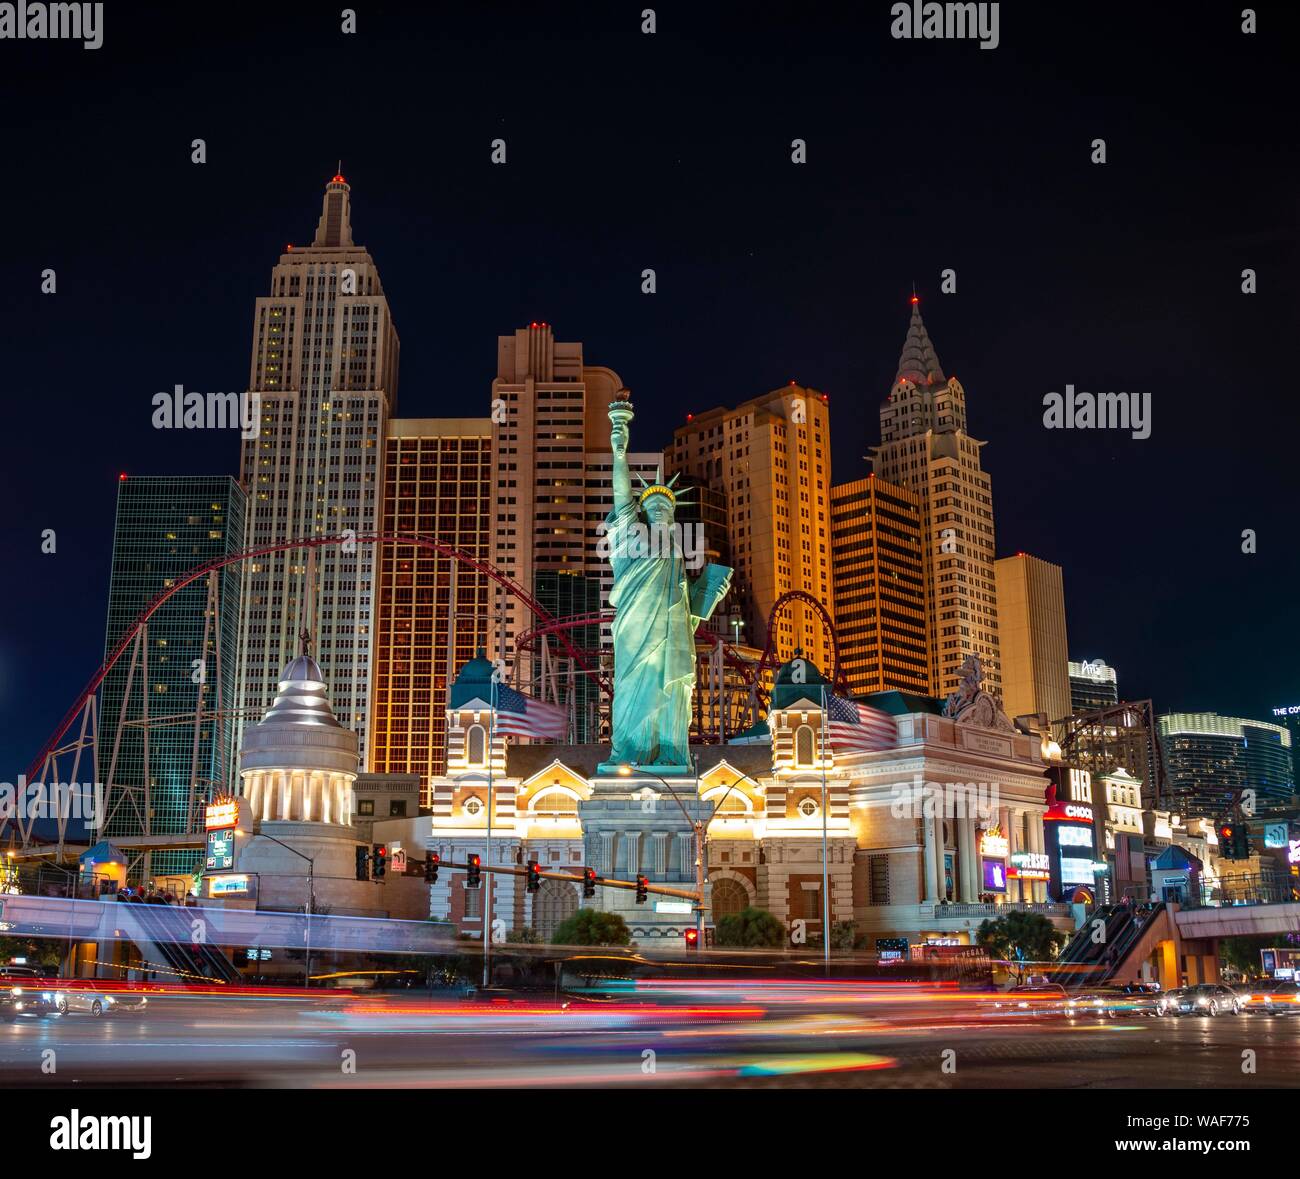 Top 97+ Images swatch las vegas new york new york casino Latest